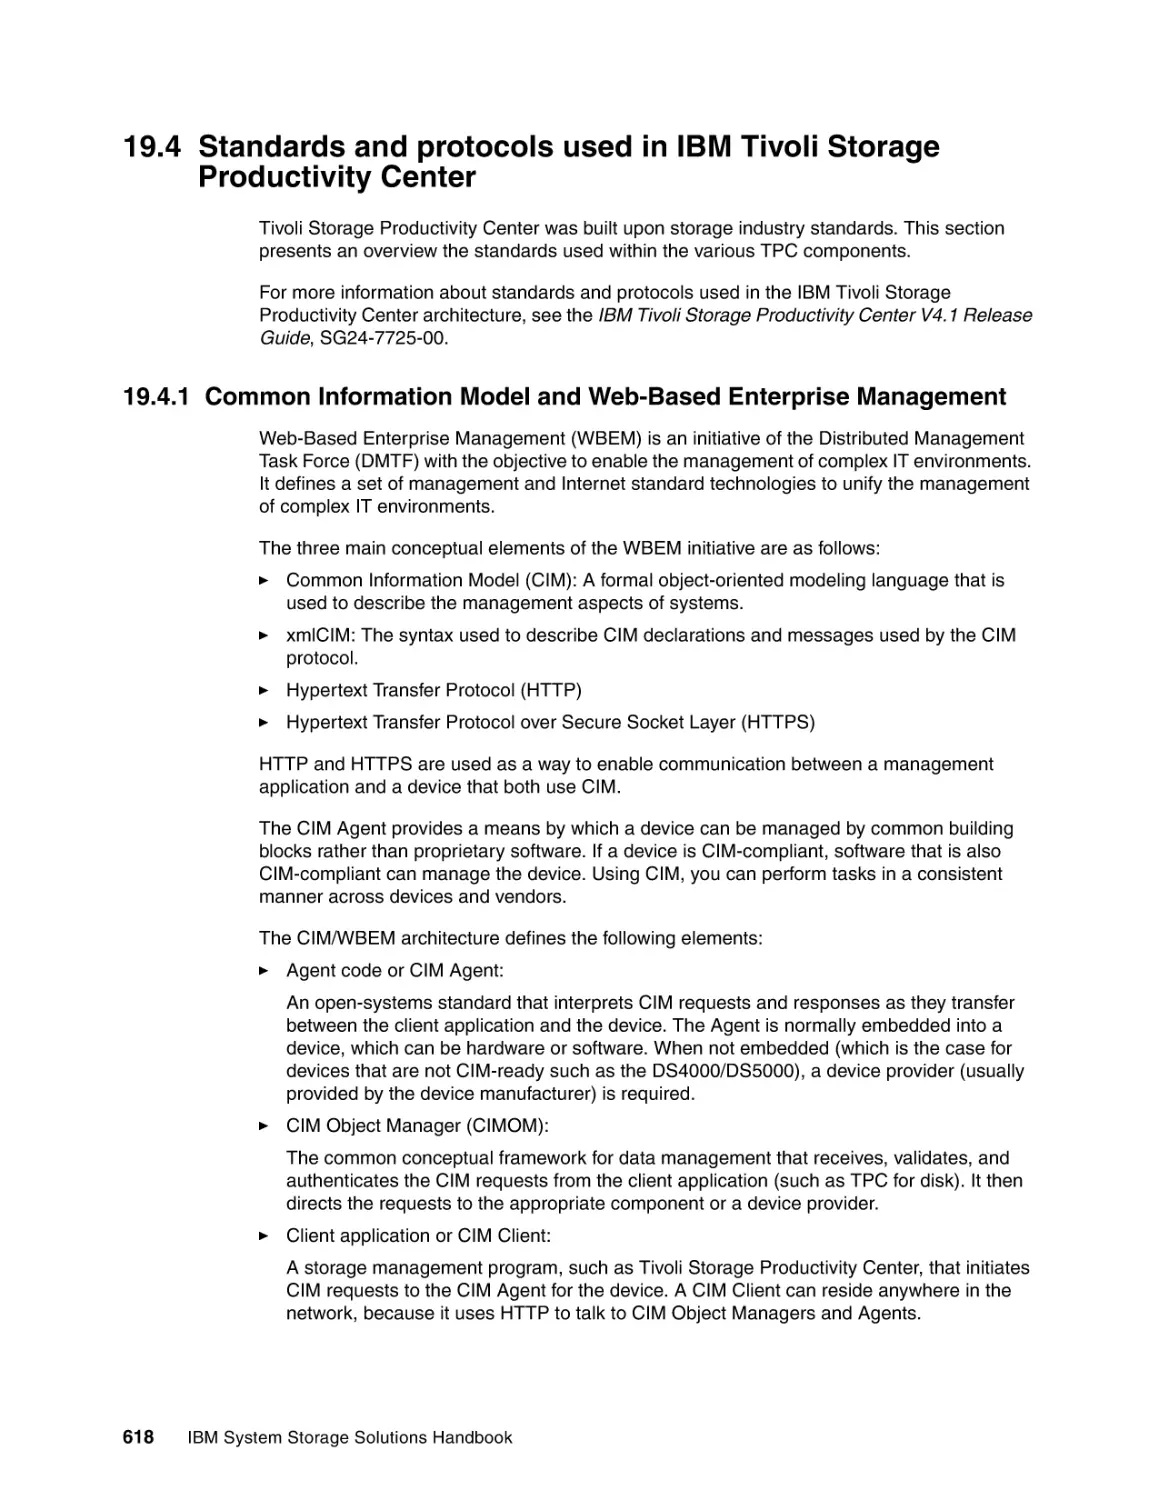 19.4 Standards and protocols used in IBM Tivoli Storage Productivity Center
19.4.1 Common Information Model and Web-Based Enterprise Management